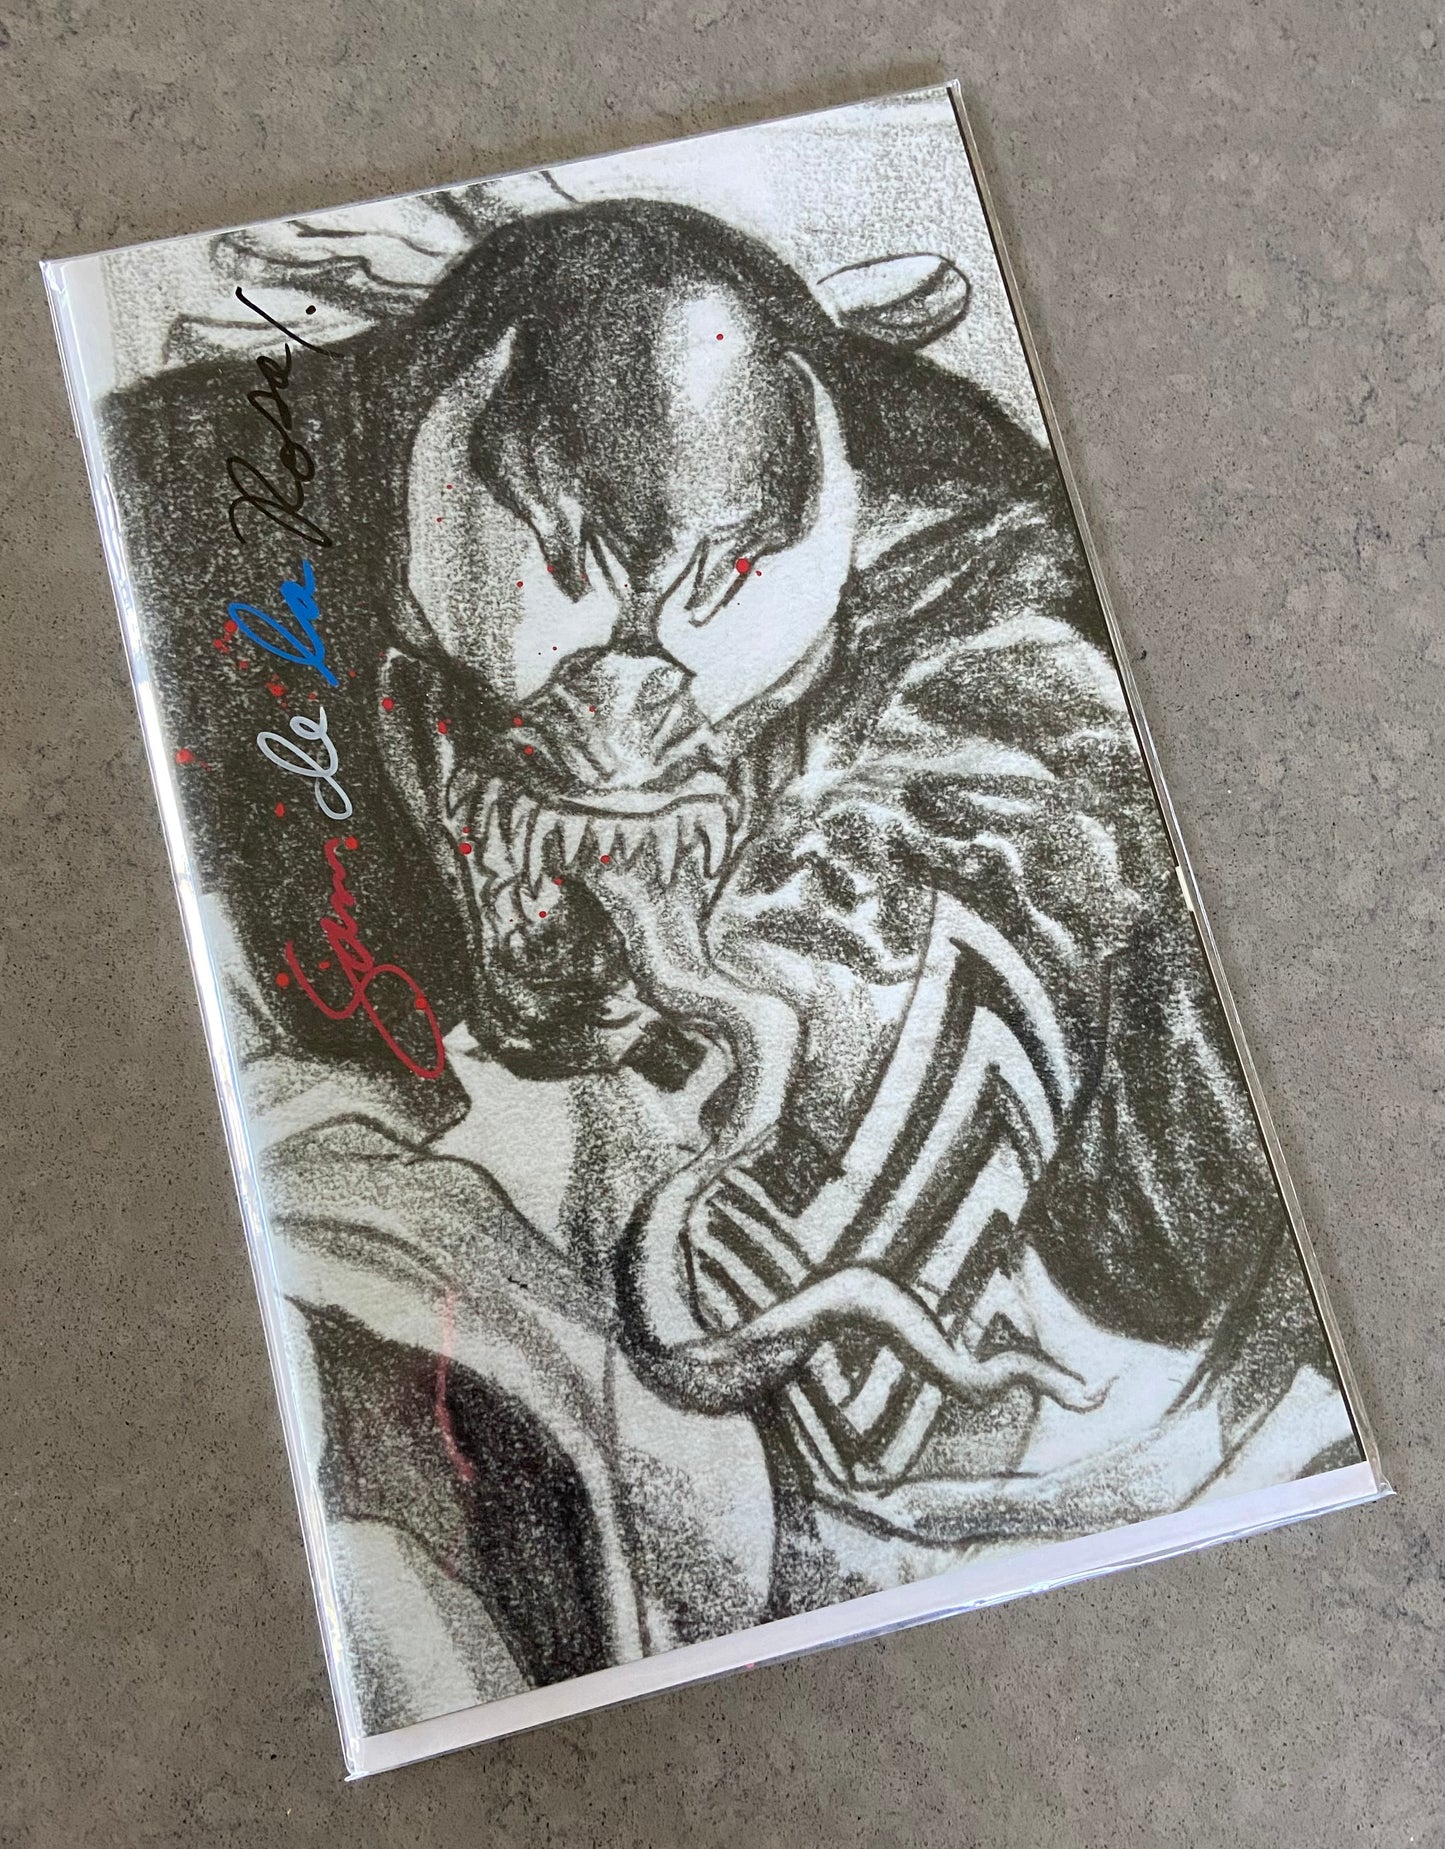 Venom Lethal Protector II #1 Alex Ross 1:100 B&W Sketch Virgin Variant Murdered Red White & Blue Signature by Sam de la Rosa